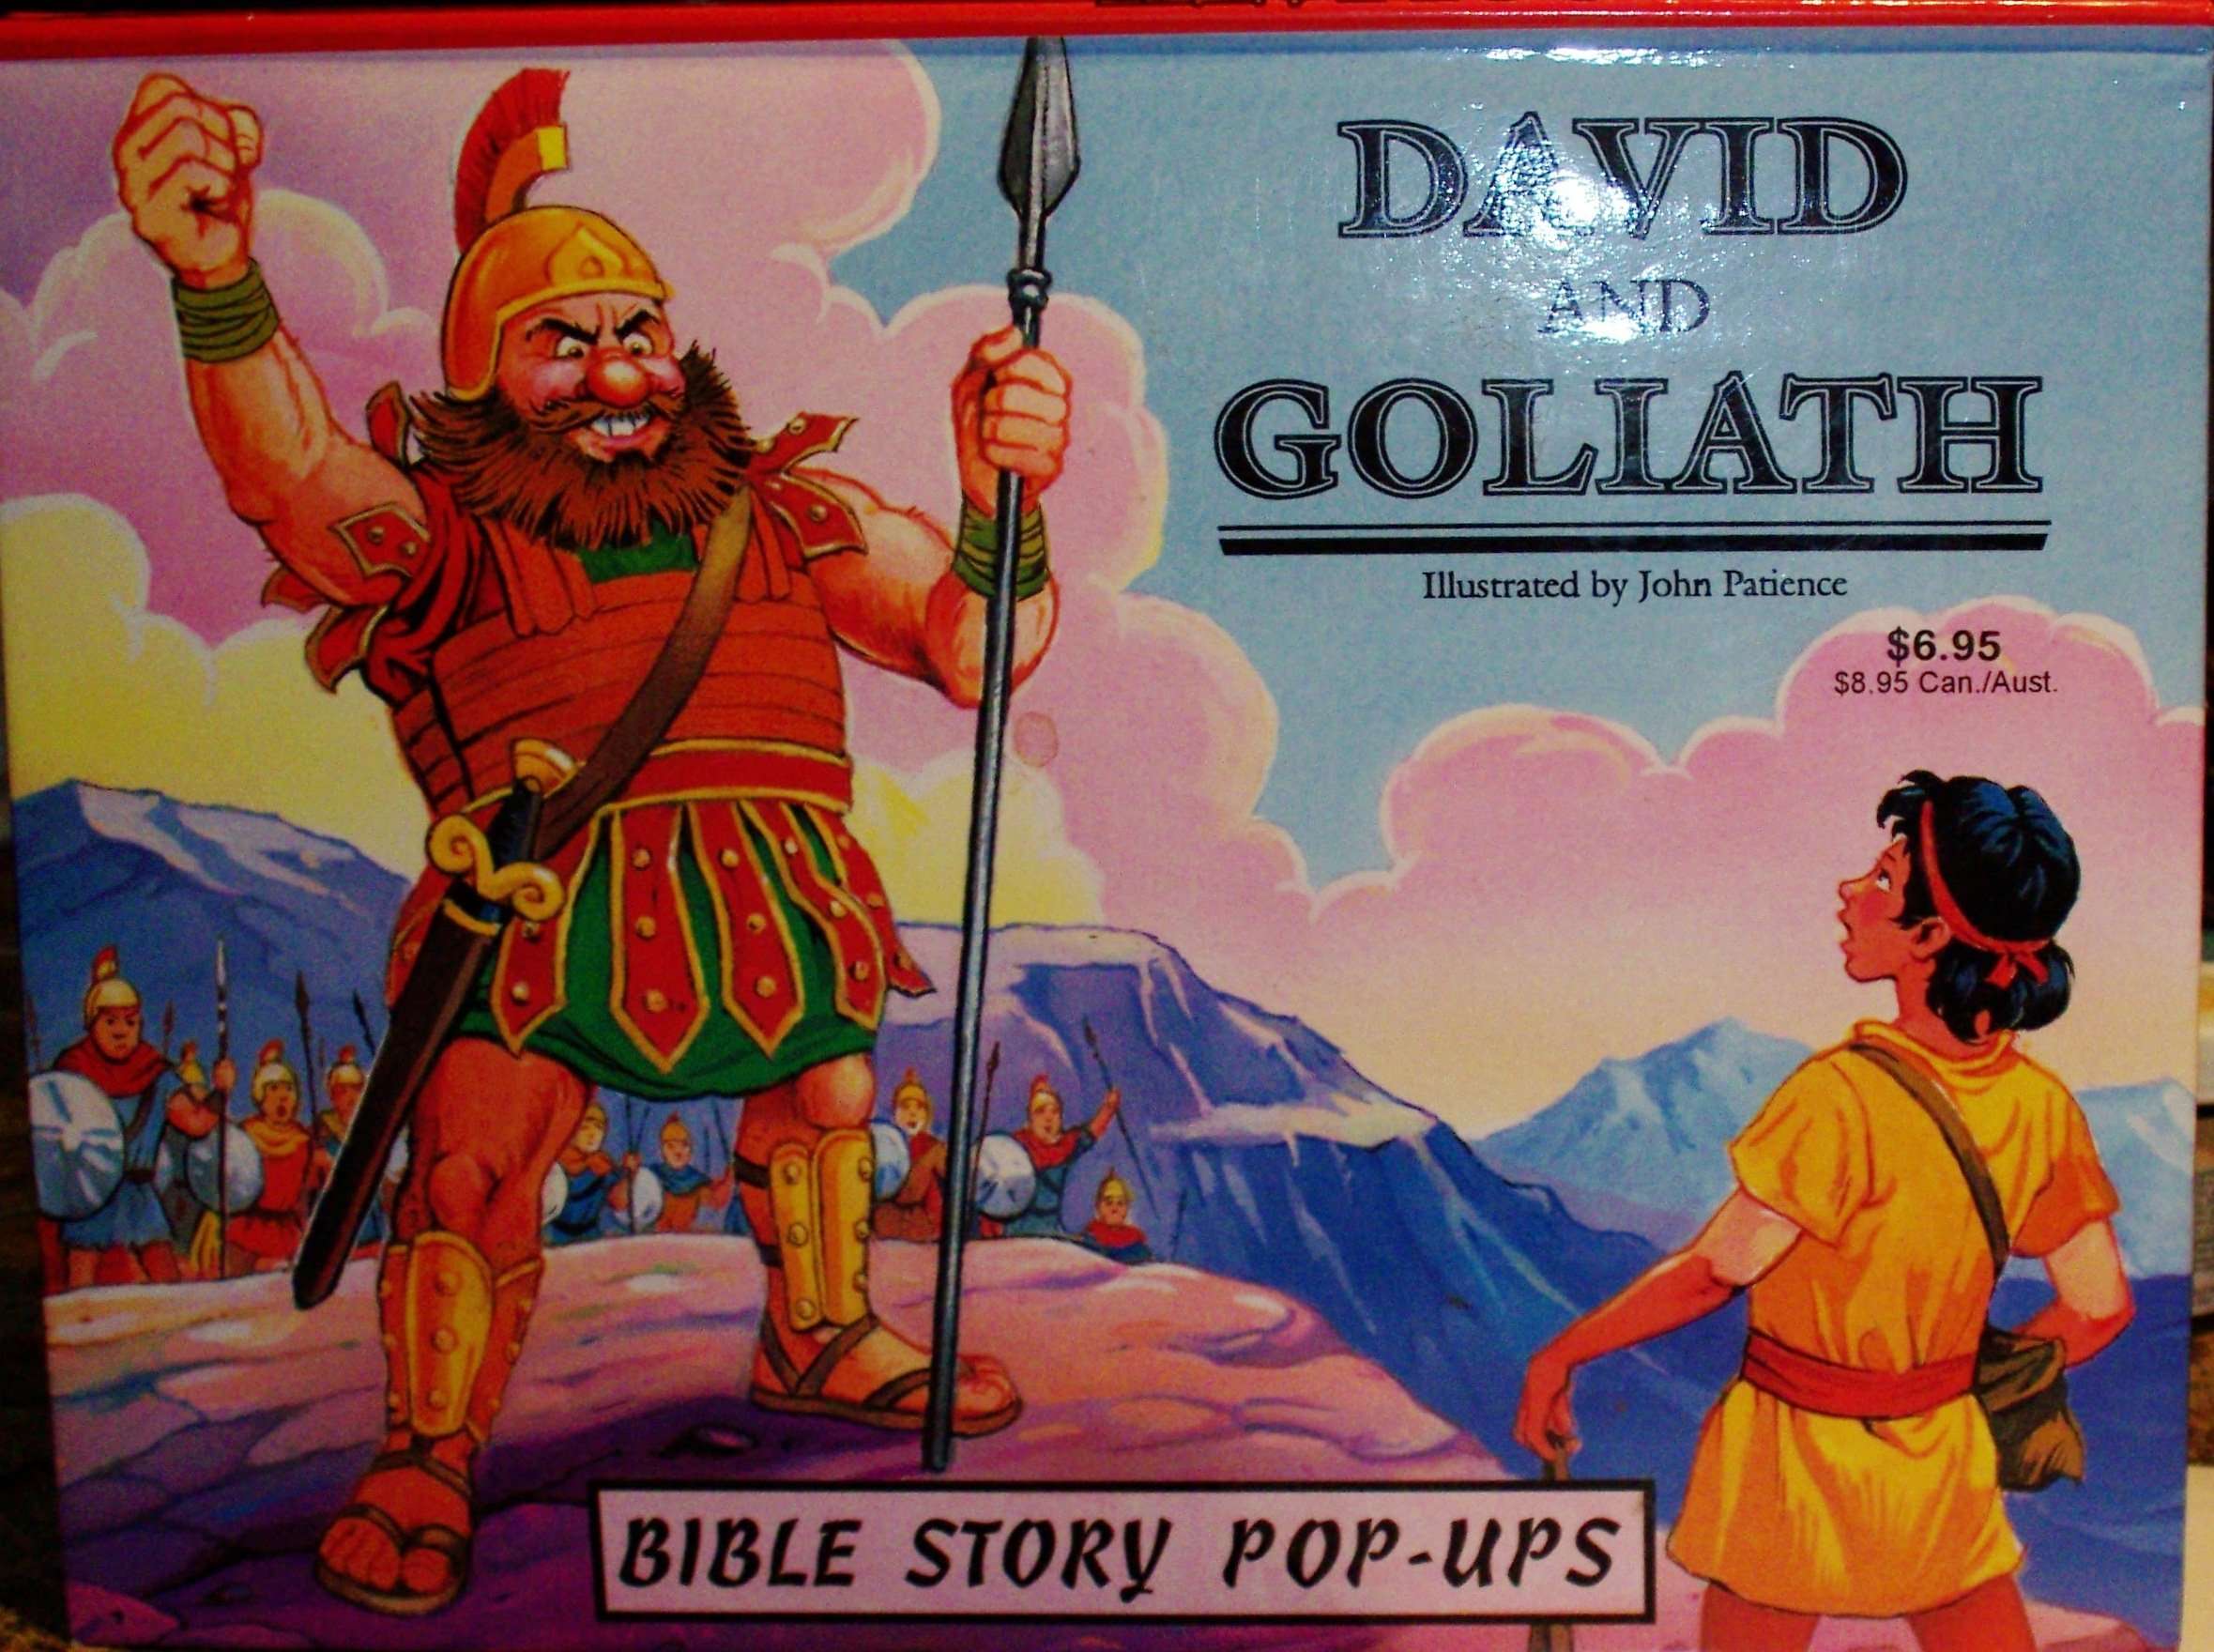 David and goliath bible book, dobraemerytura.org